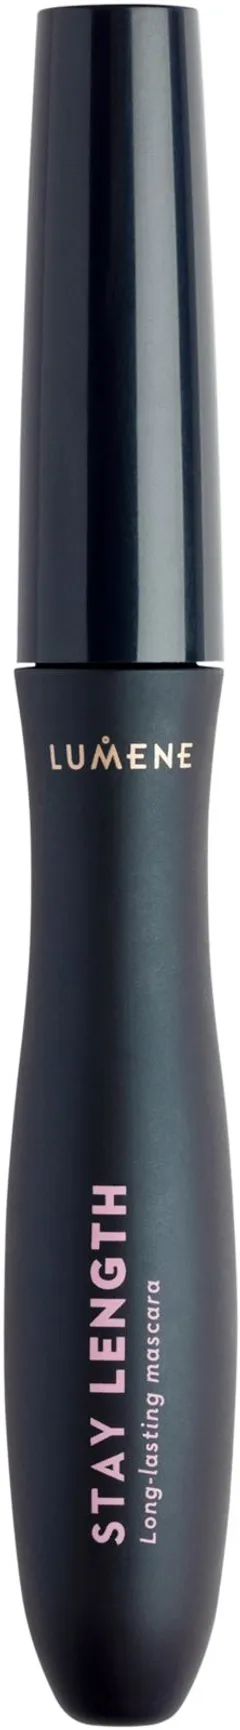 Lumene Stay Length Mascara Black 9 ml - 2